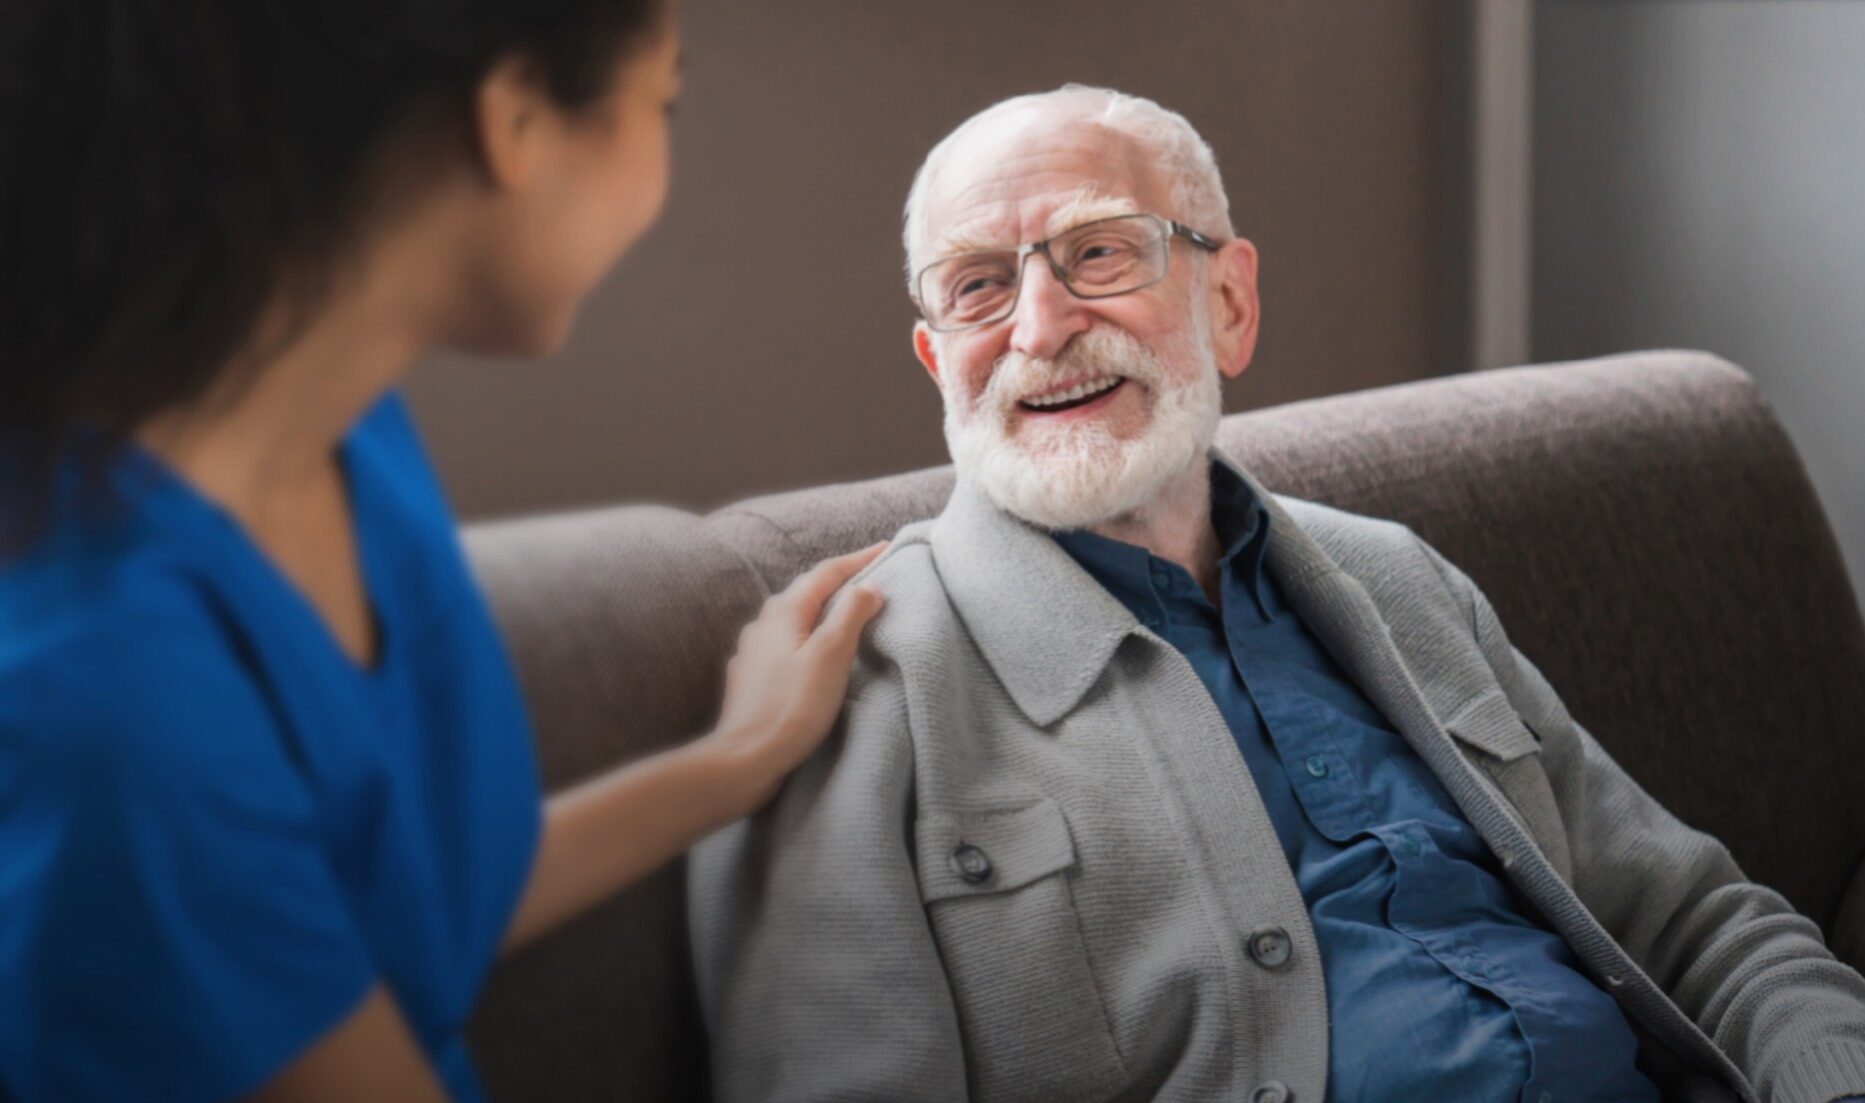 behavioral health nurse in blue scrubs with her hand on older man's shoulder